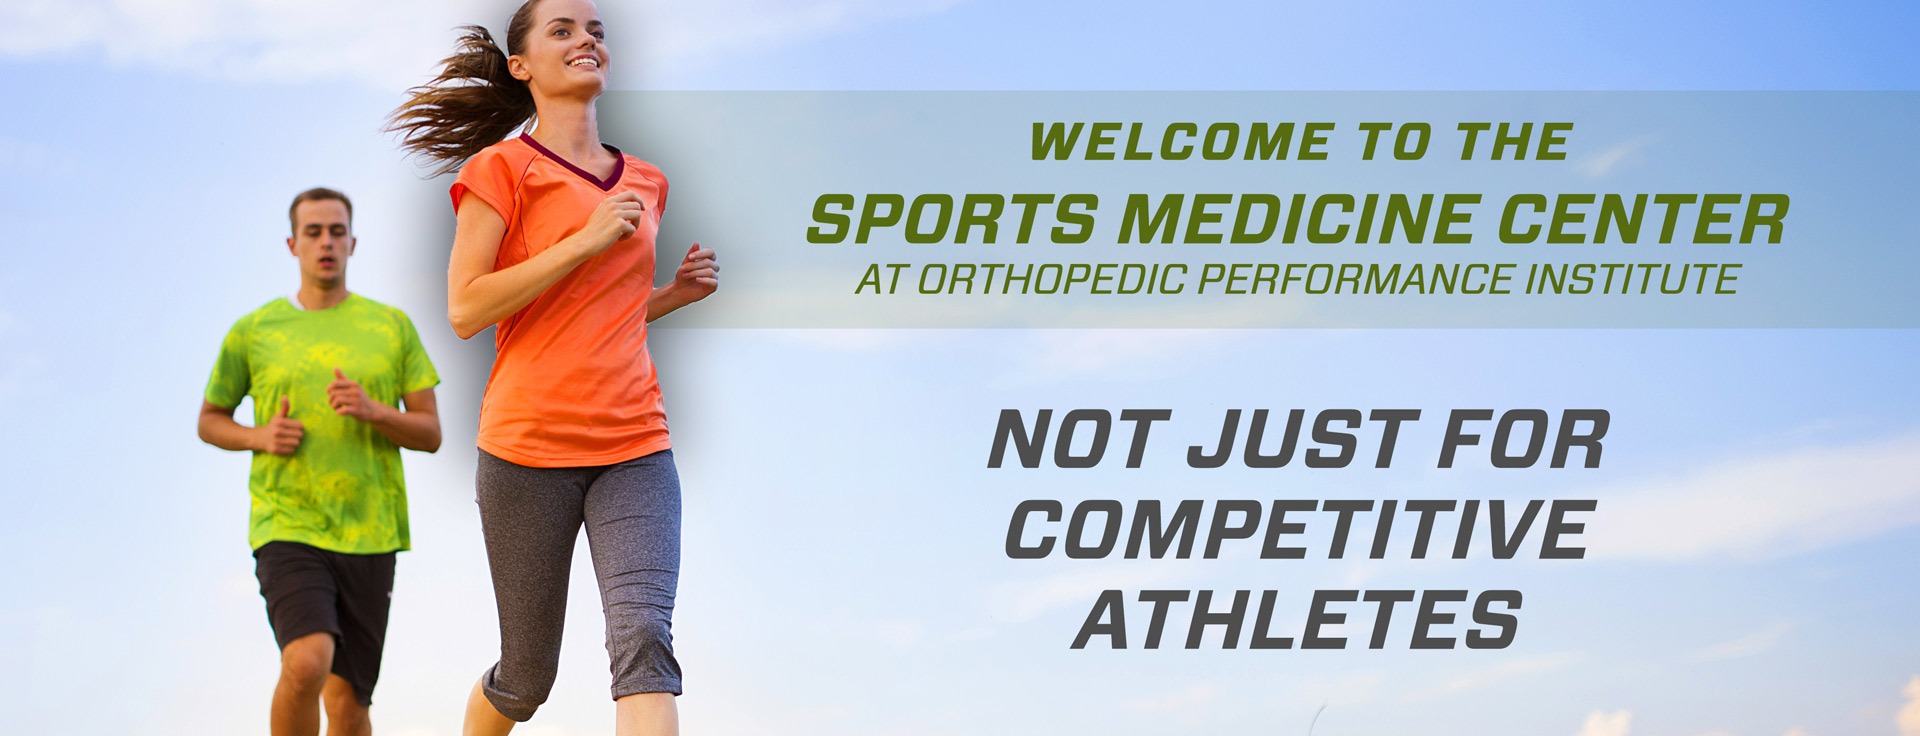 Sports Medicine Clinic Orthopedic Surgeons Orthopedic Performance